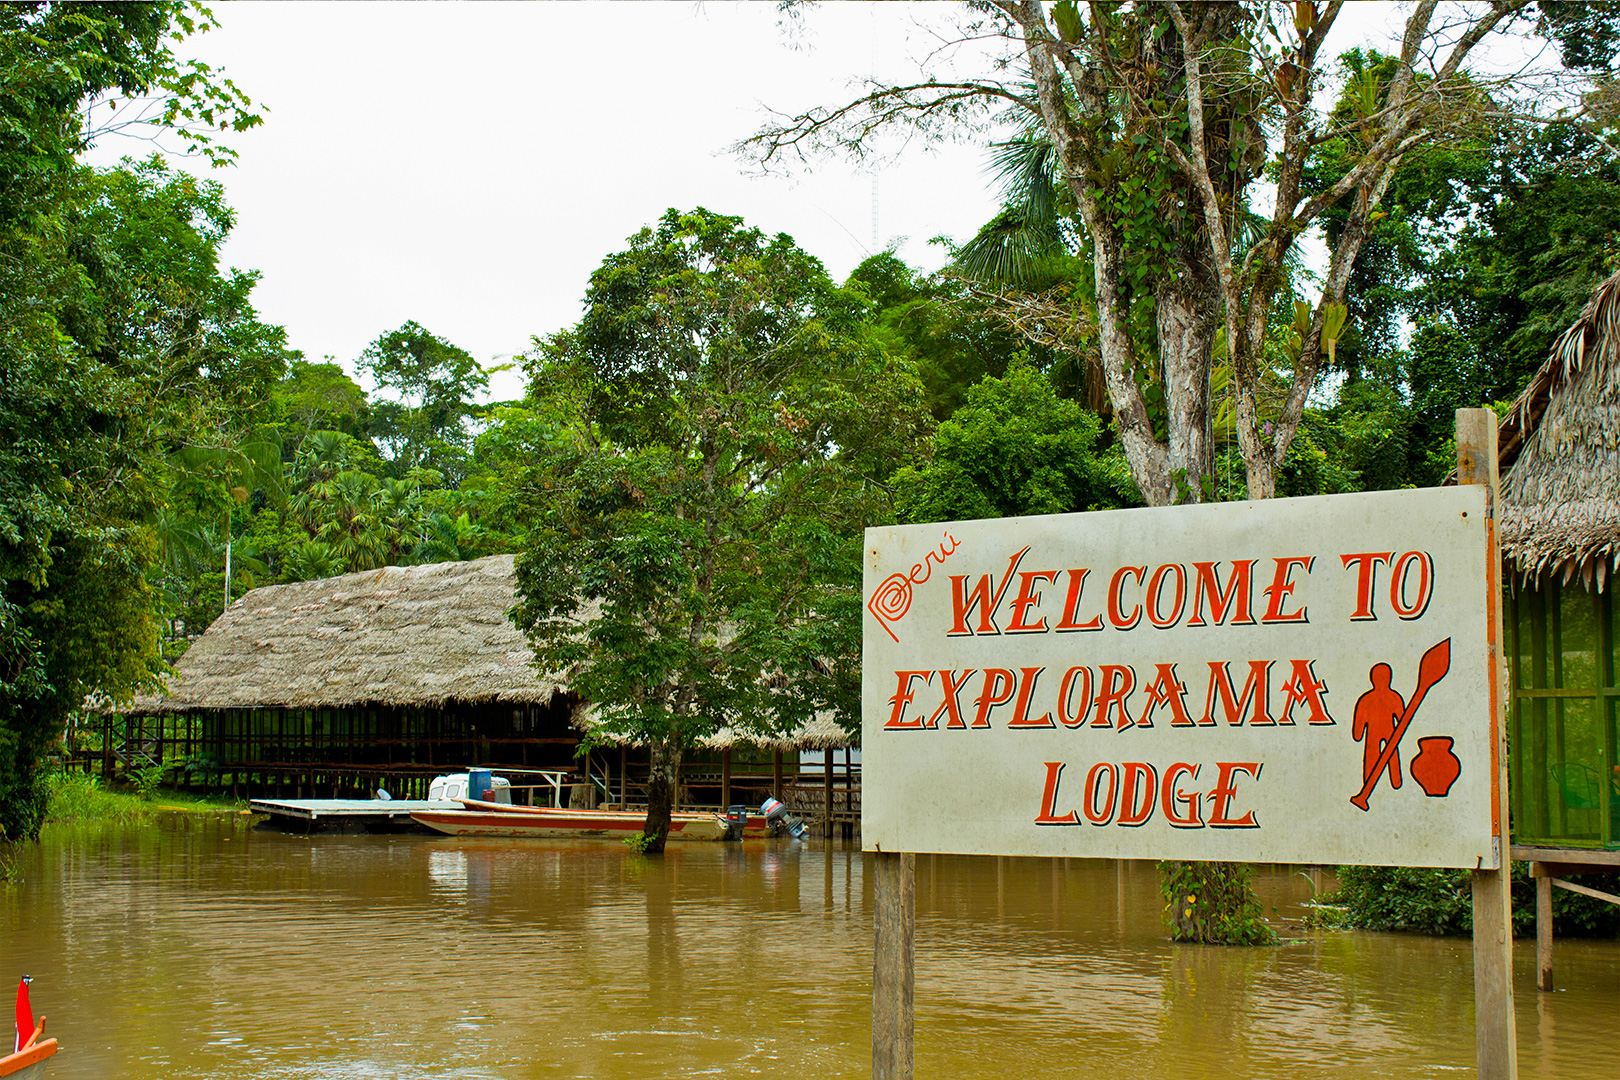 Explorama Lodge